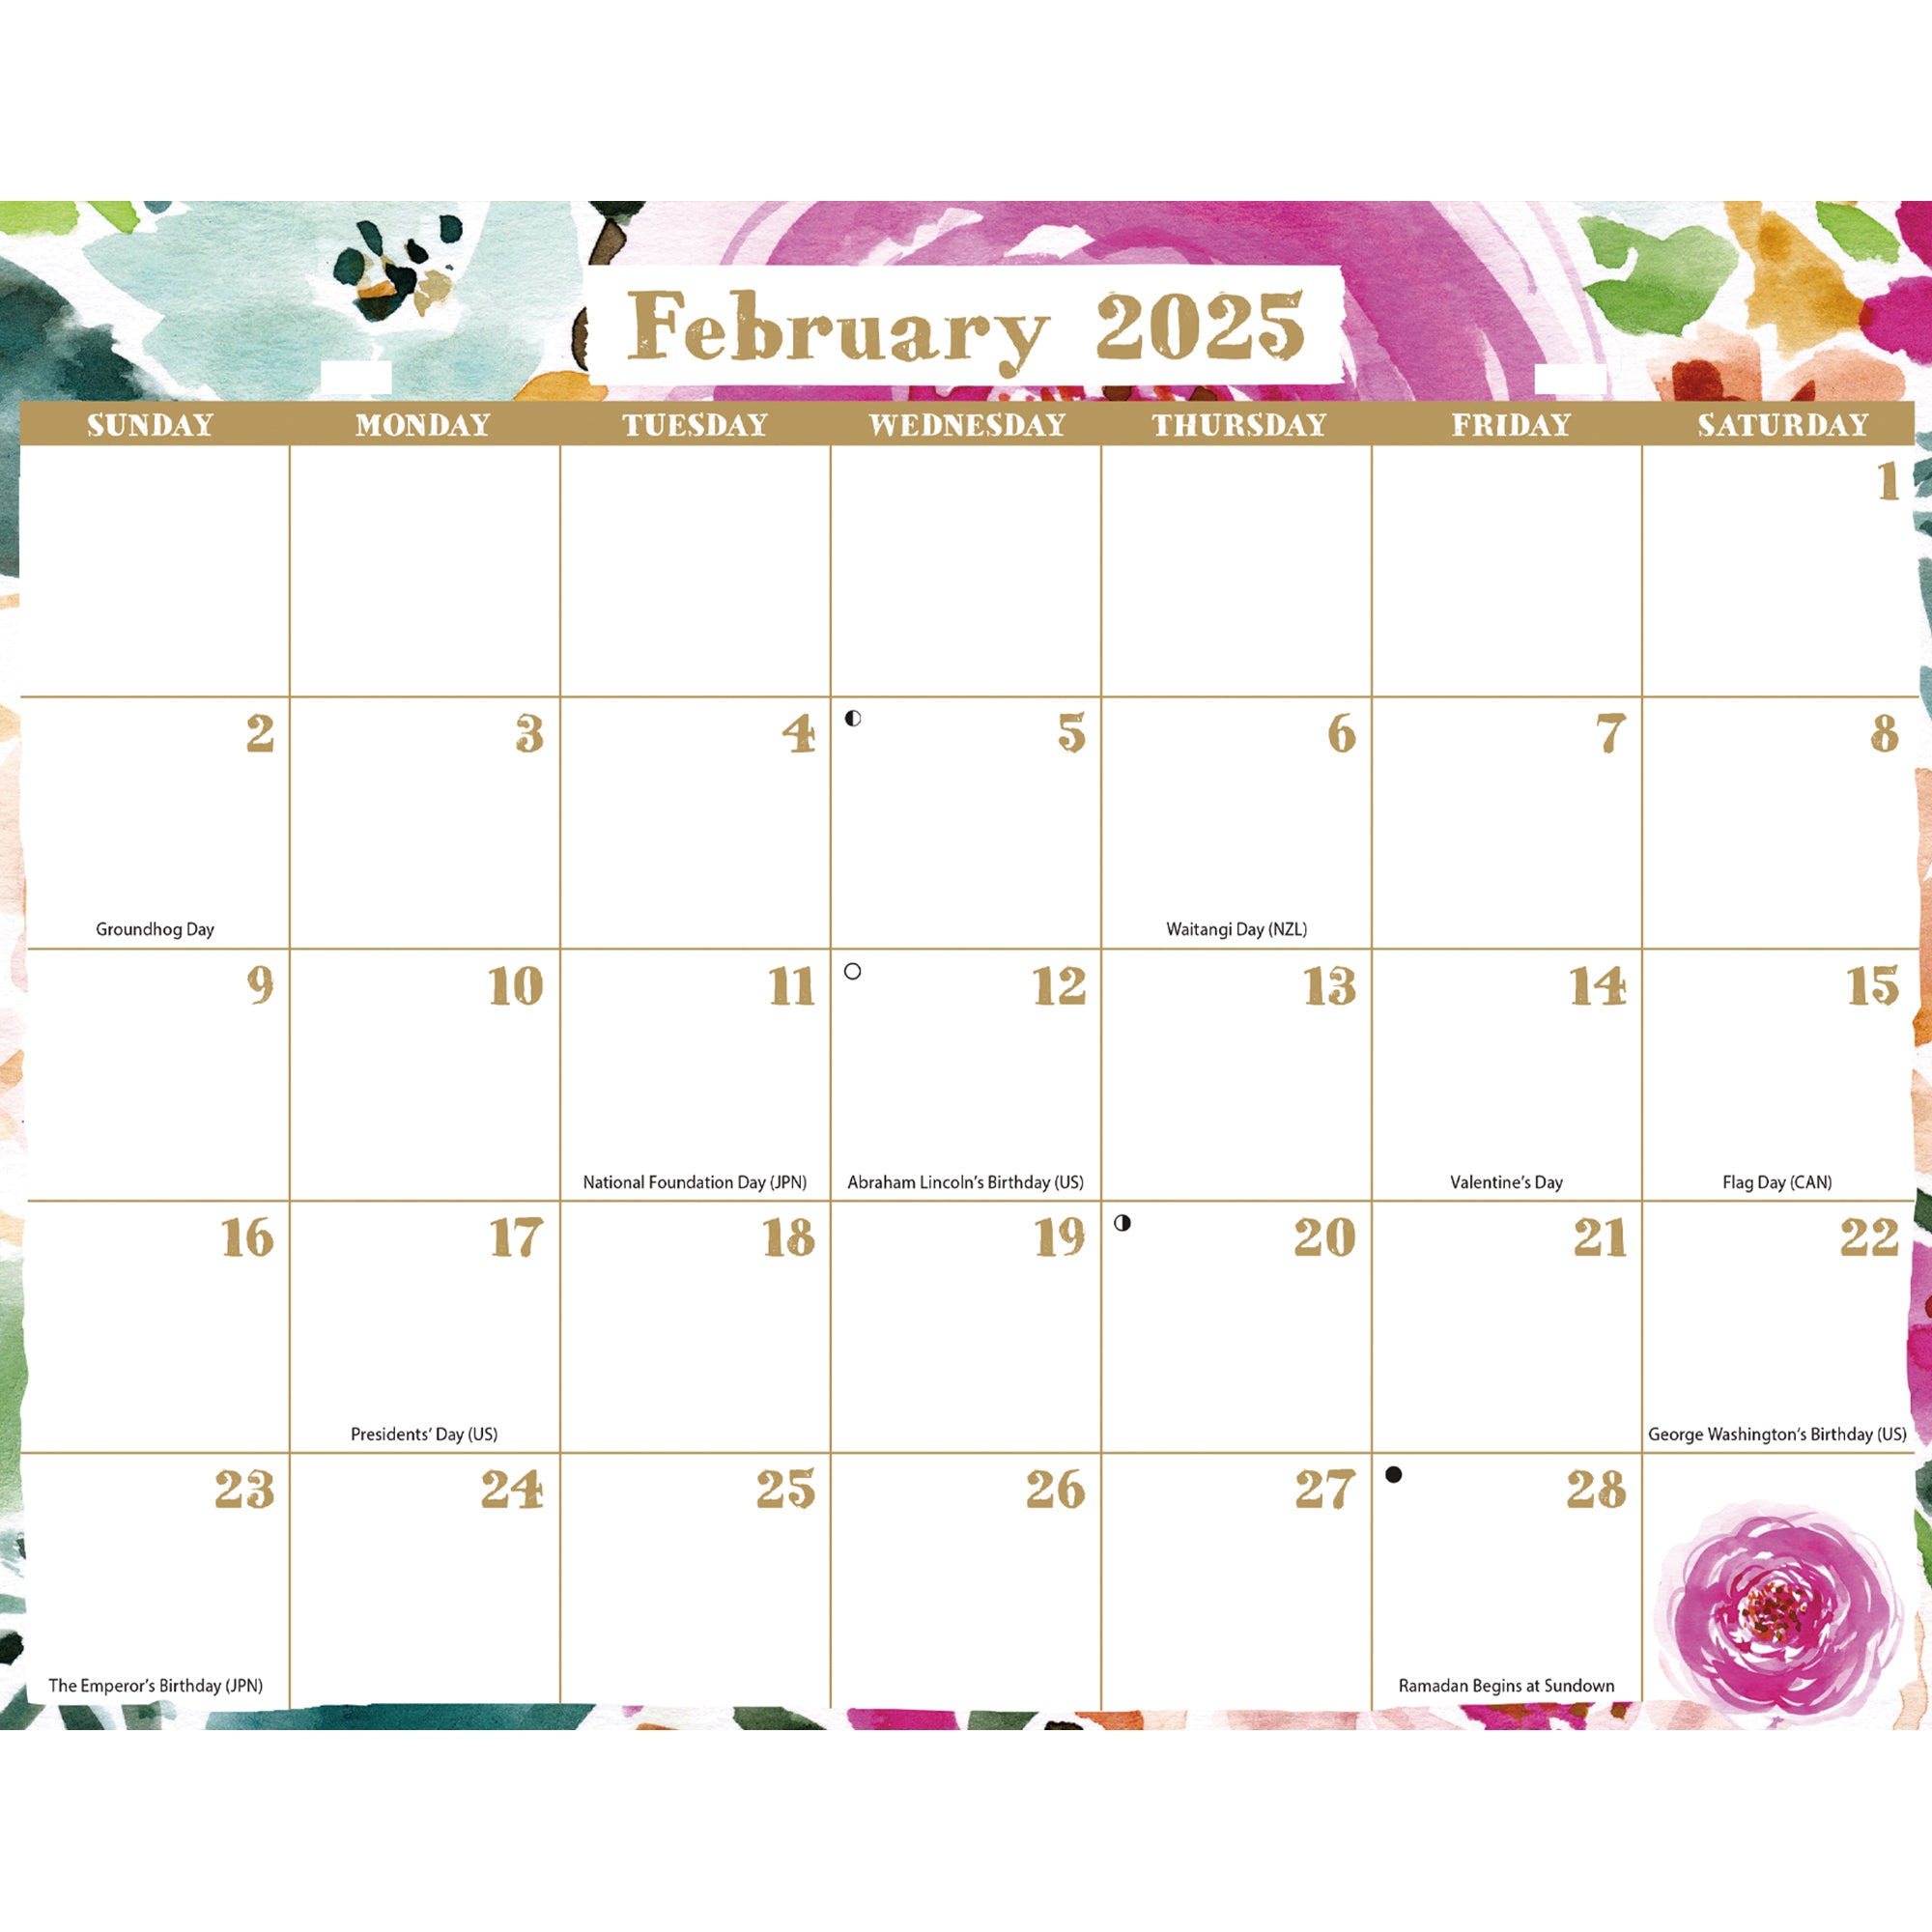 2025 Grow Wild Tri-View - 3-Month View Wall Calendar